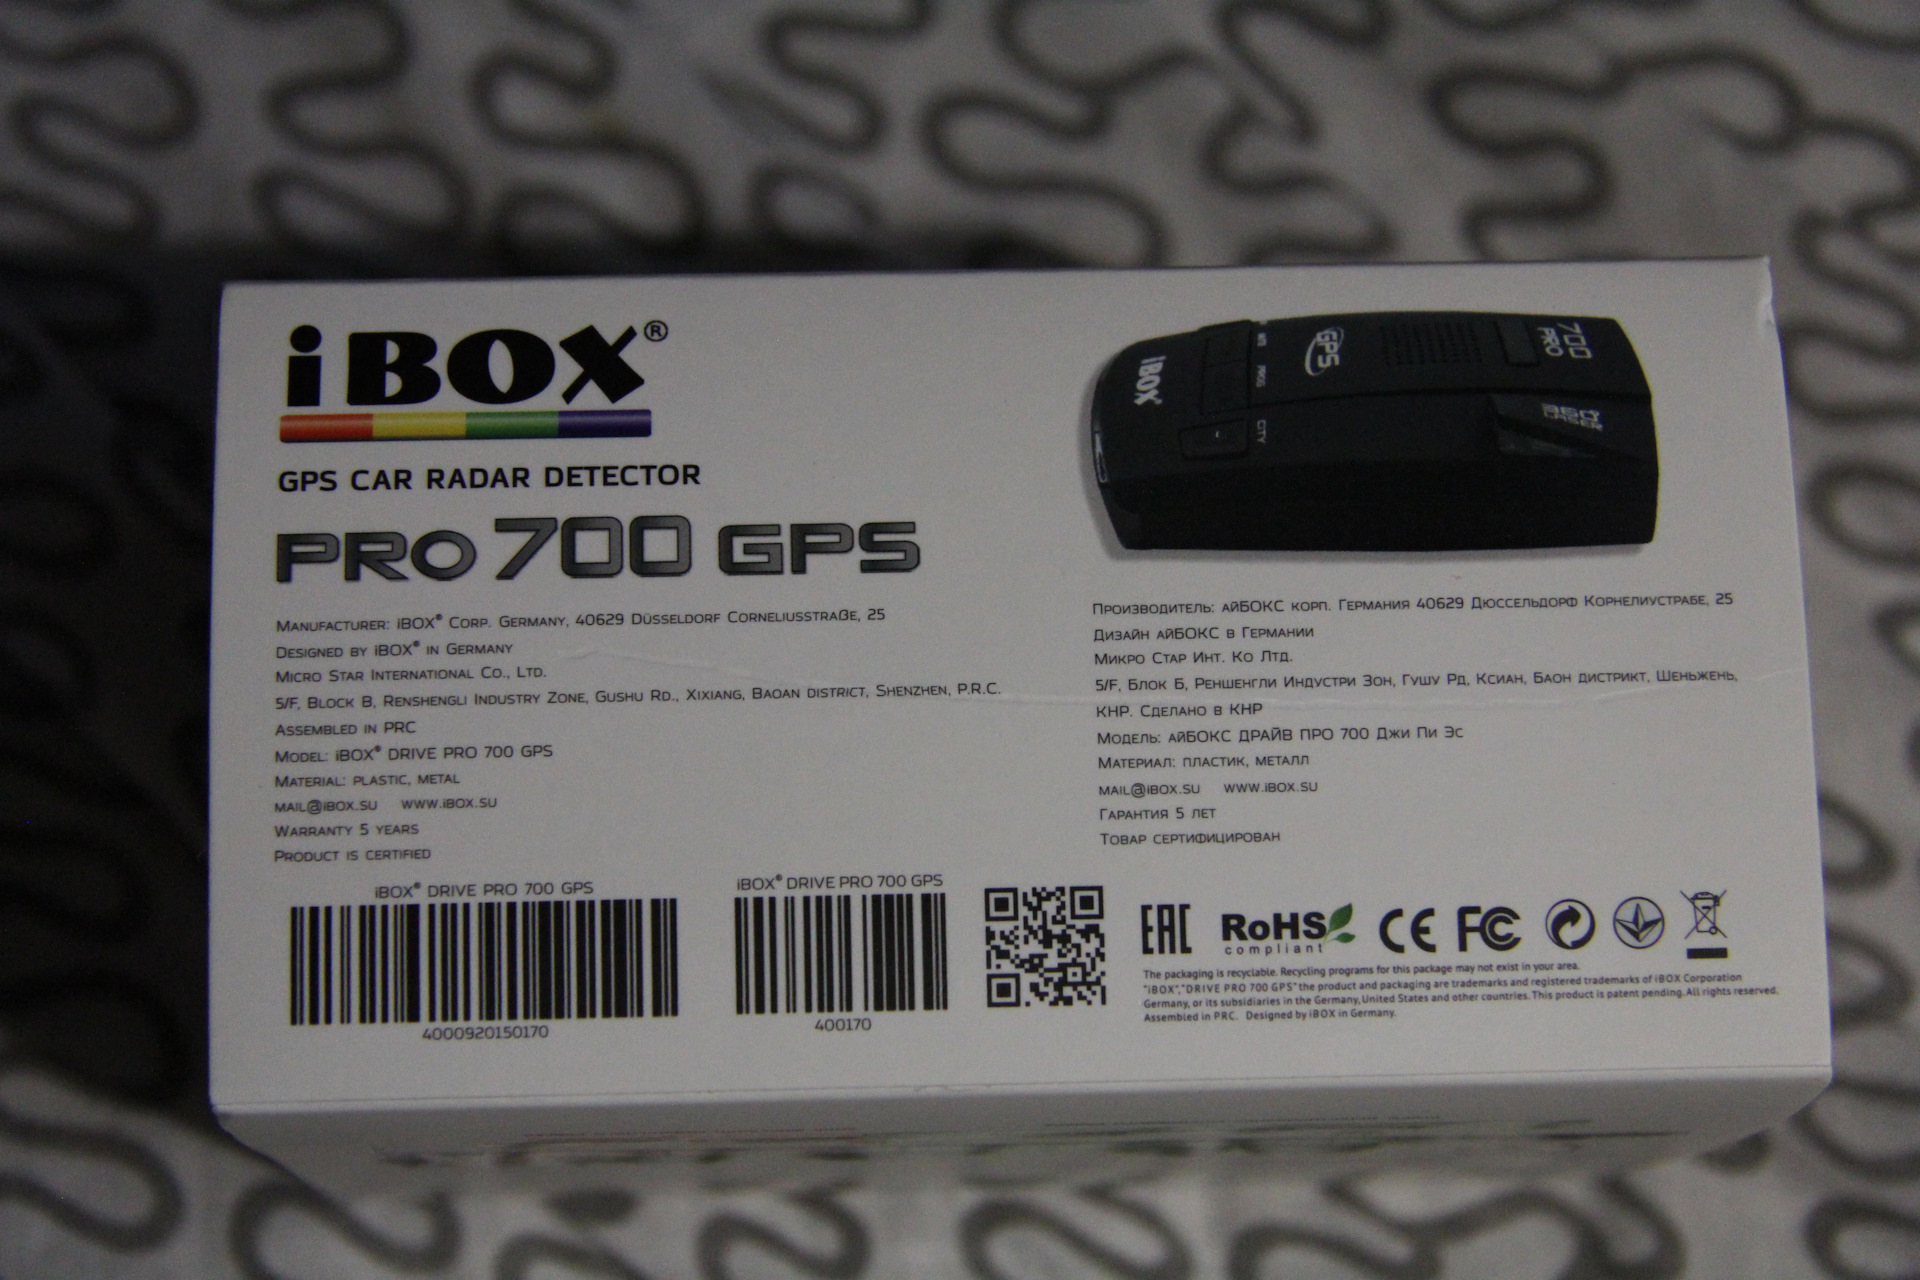 Фен dyson hs05 ibox store ибокс сторе. Видеорегистратор IBOX Pro-700. Запчасти видеорегистратор IBOX 700. Видеорегистратор IBOX Pro-700 разъем. Service manual IBOX Pro 700.